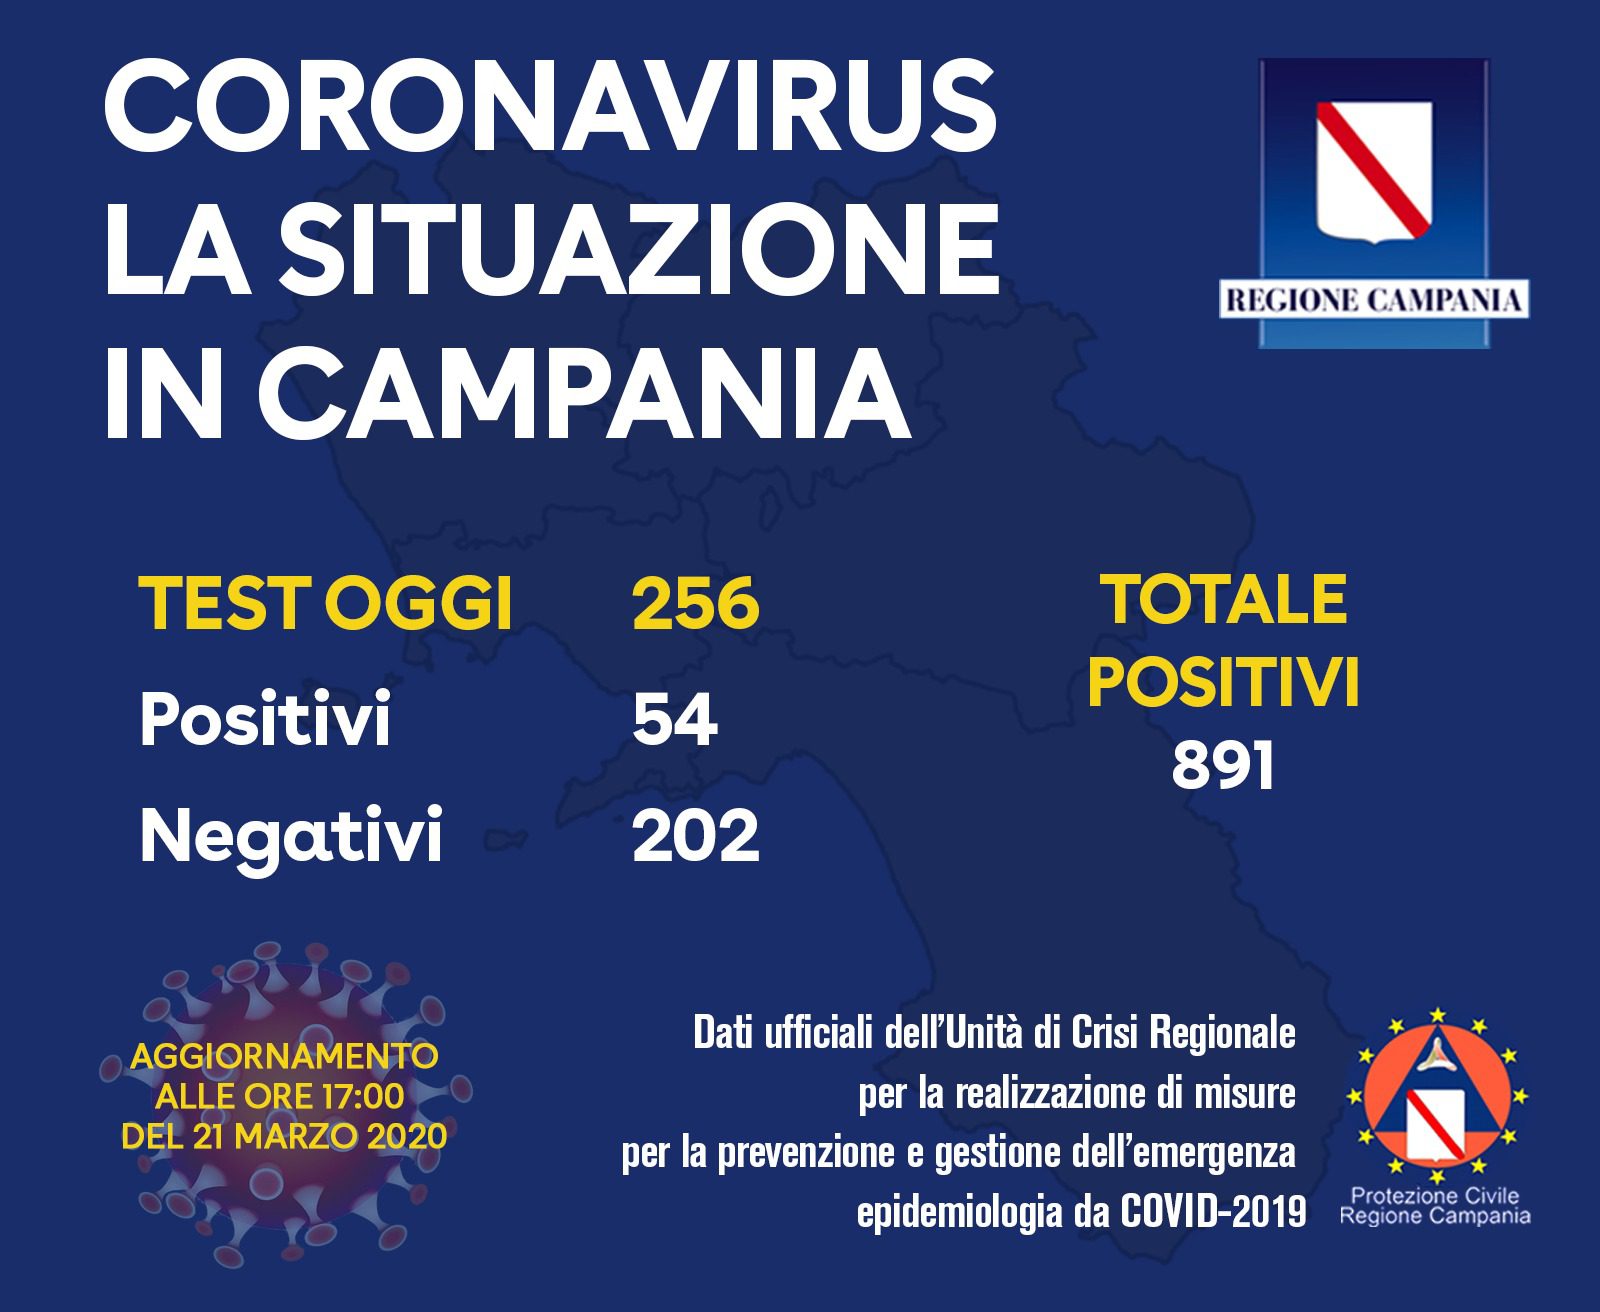 Coronavirus: 891 positivi in Campania